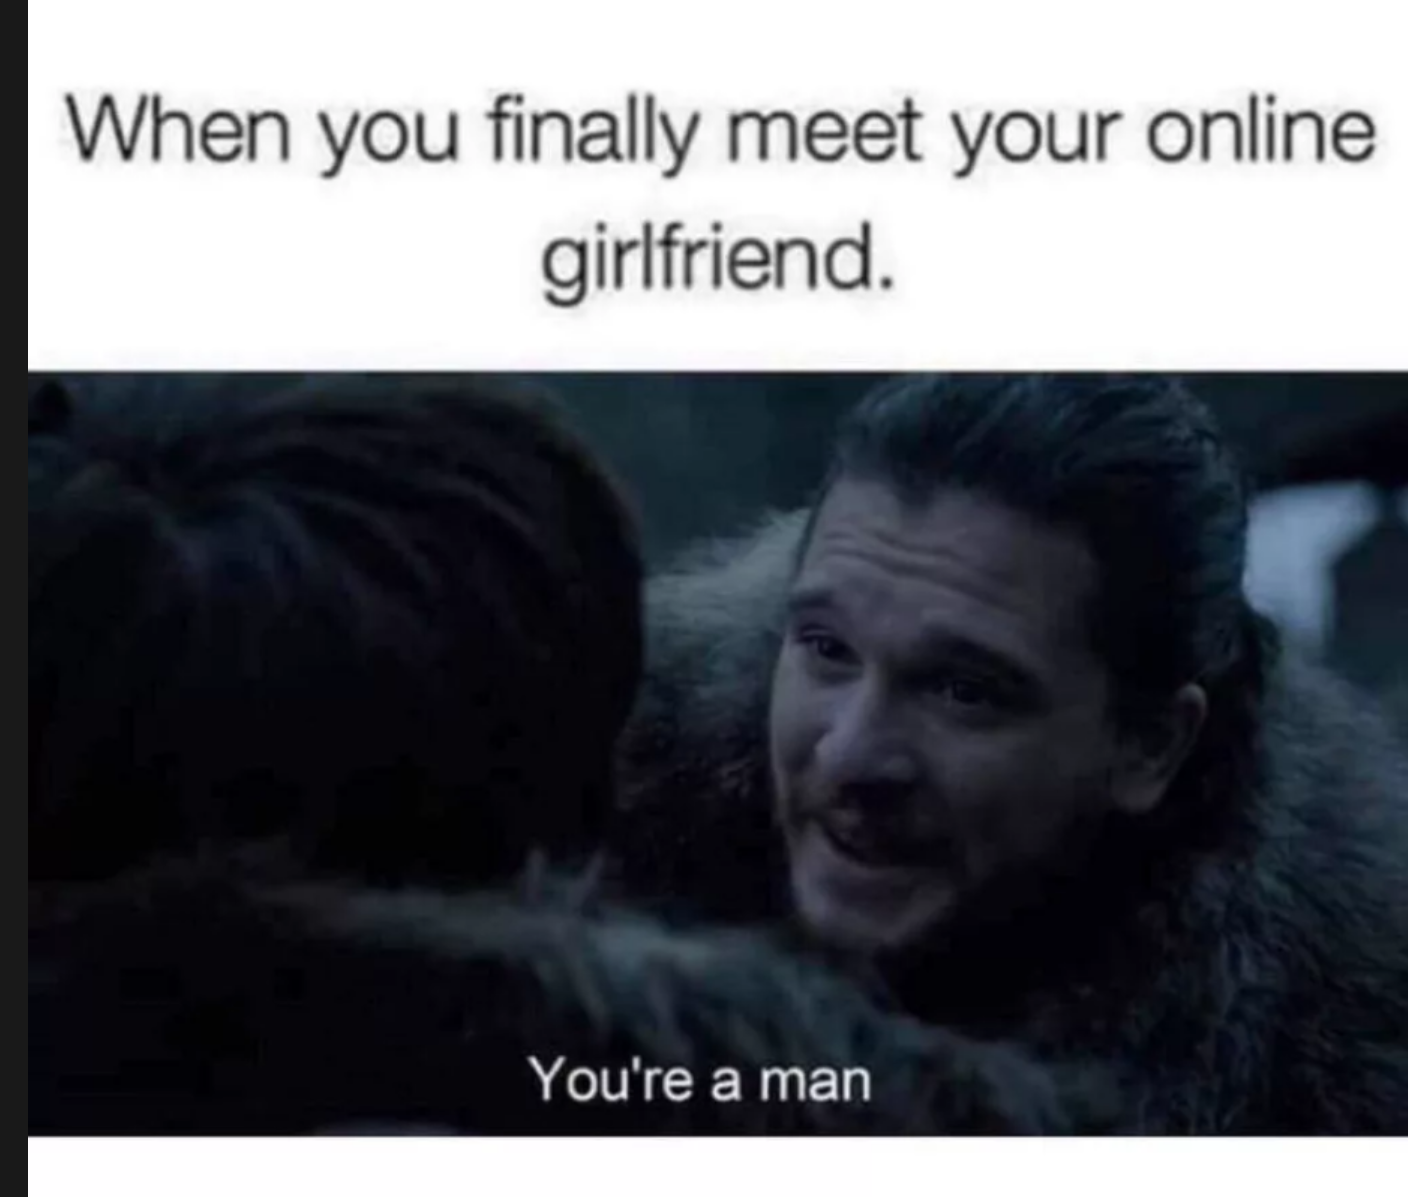 photo caption - When you finally meet your online girlfriend You're a man